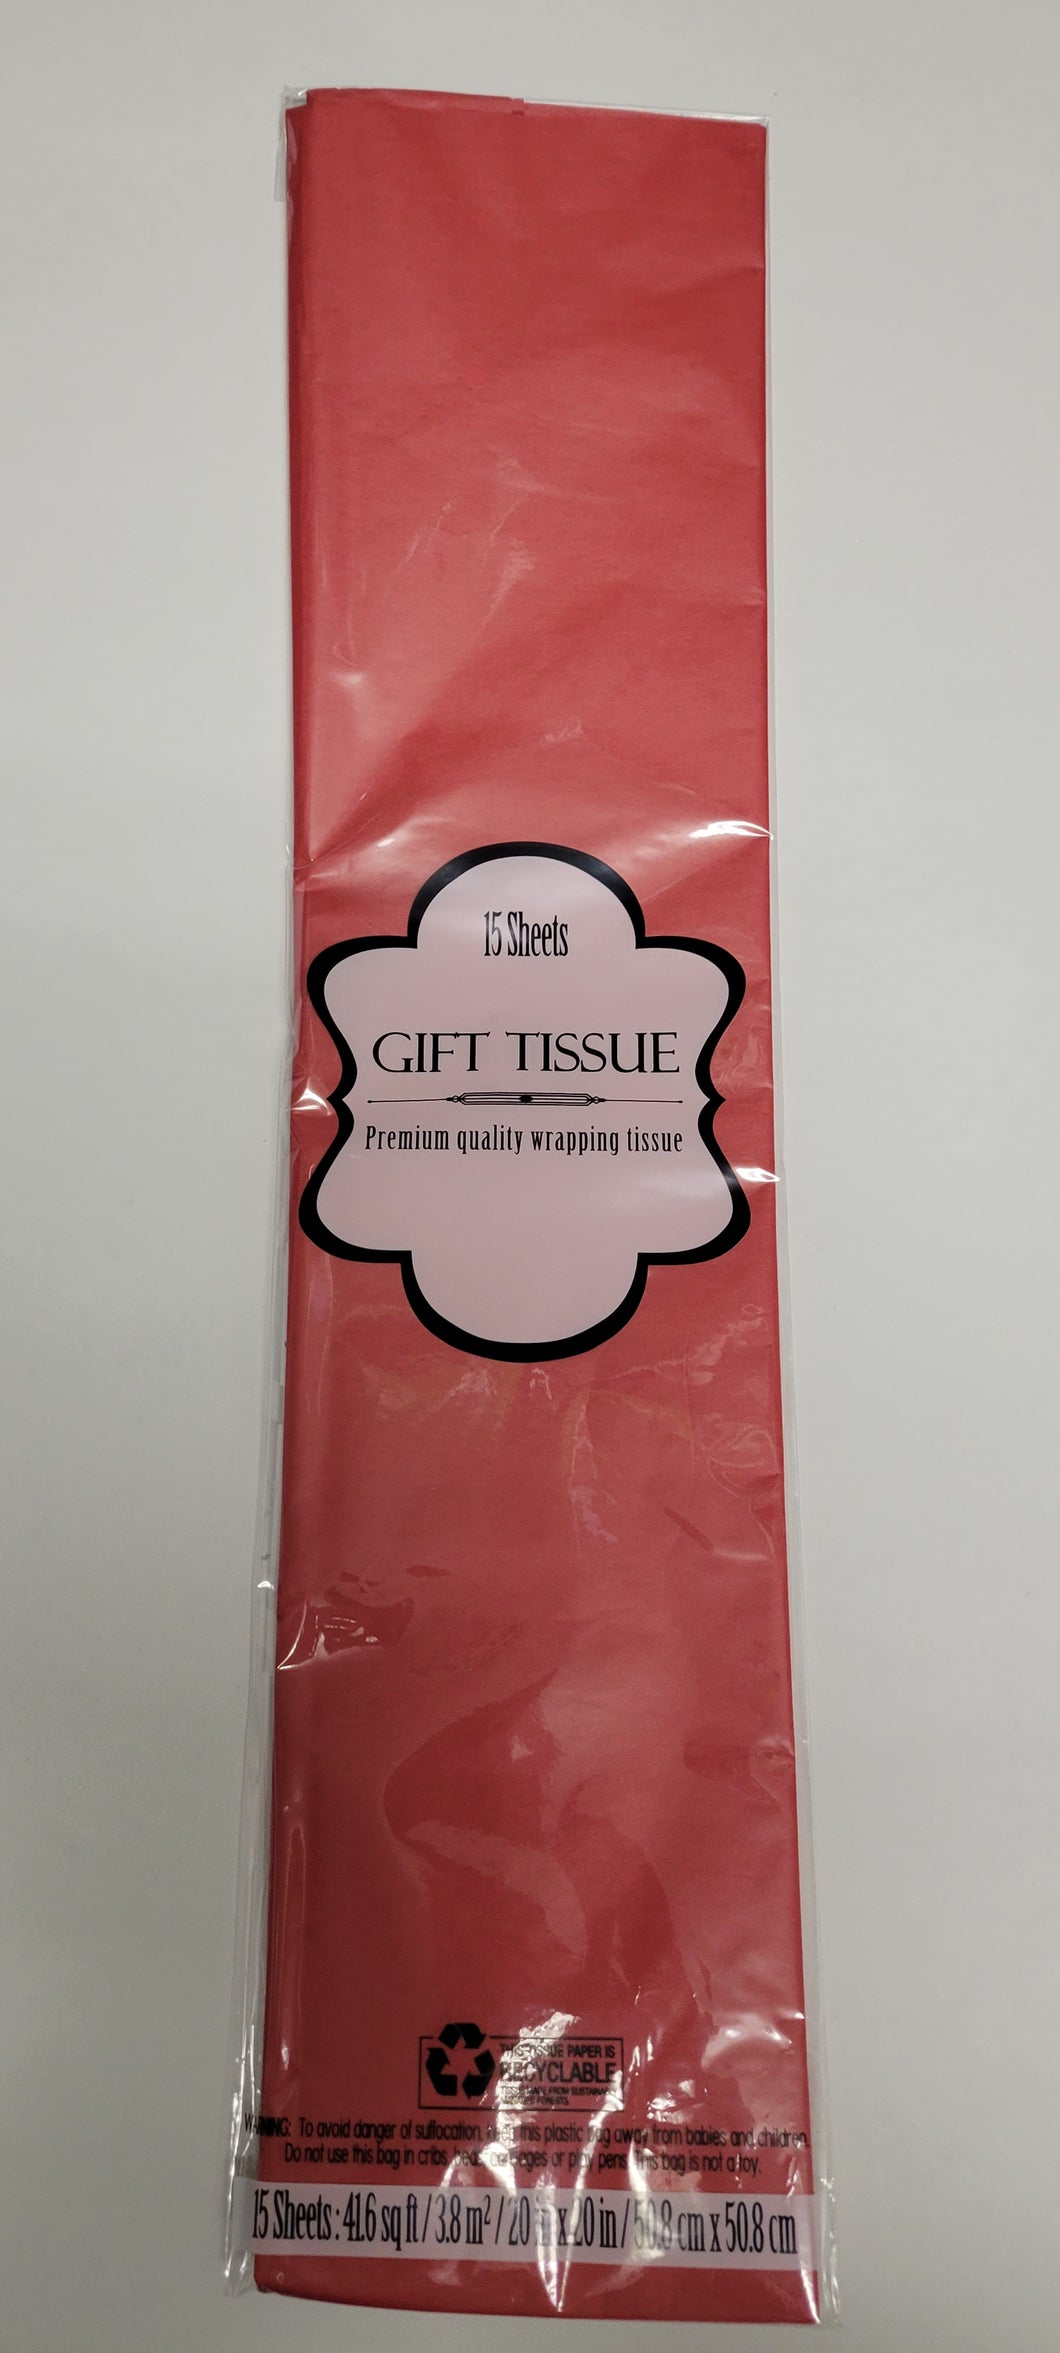 Gift tissue paper